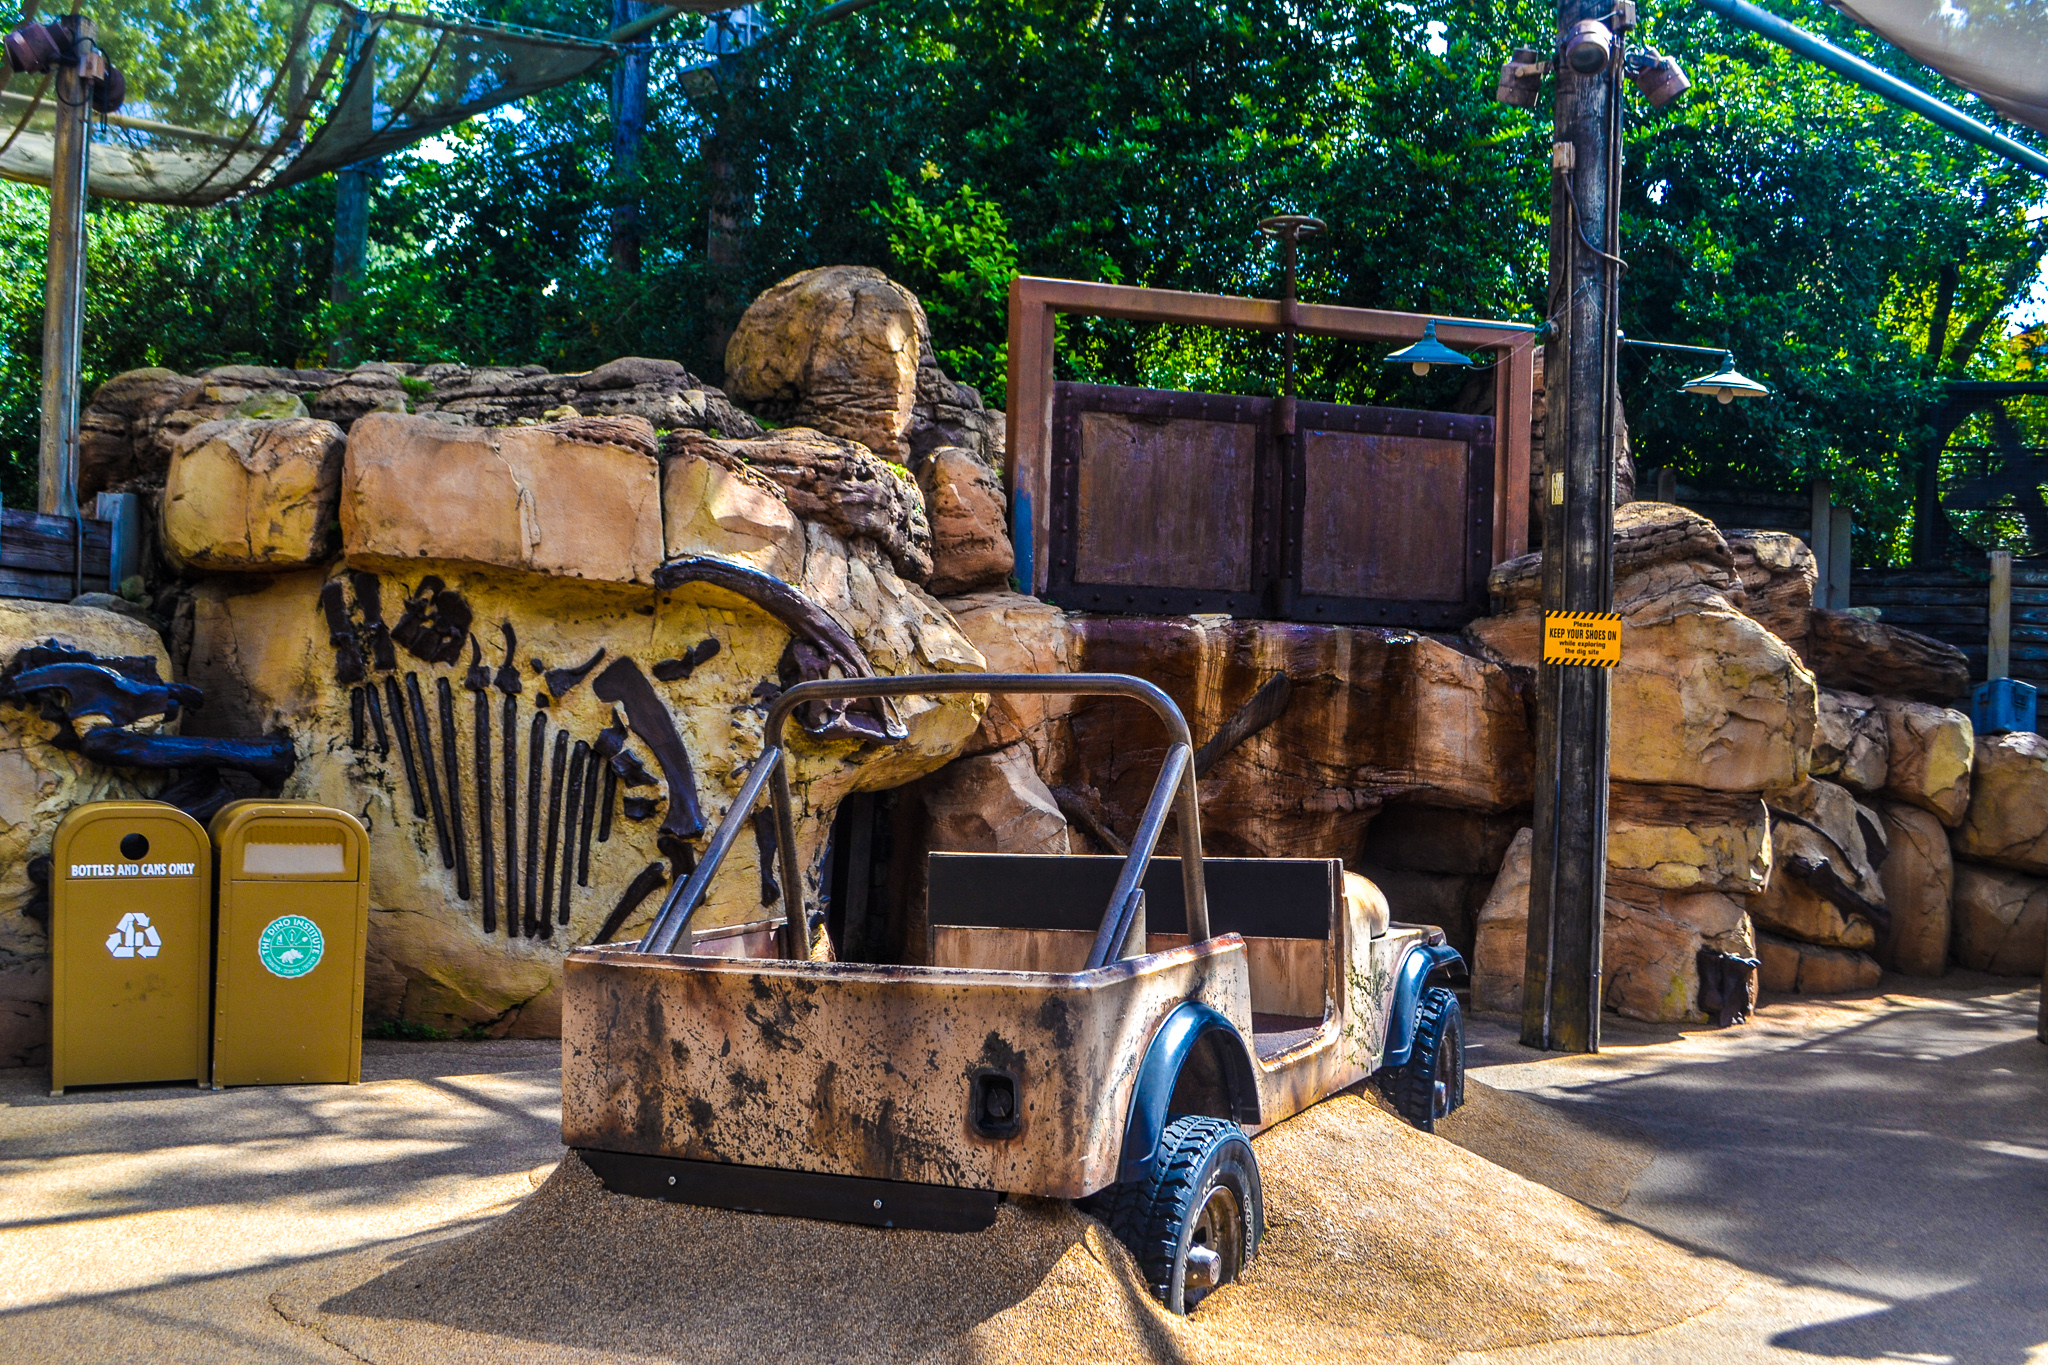 The play area in the Boneyard in Dinoland U.S.A at Disney's Animal Kingdom